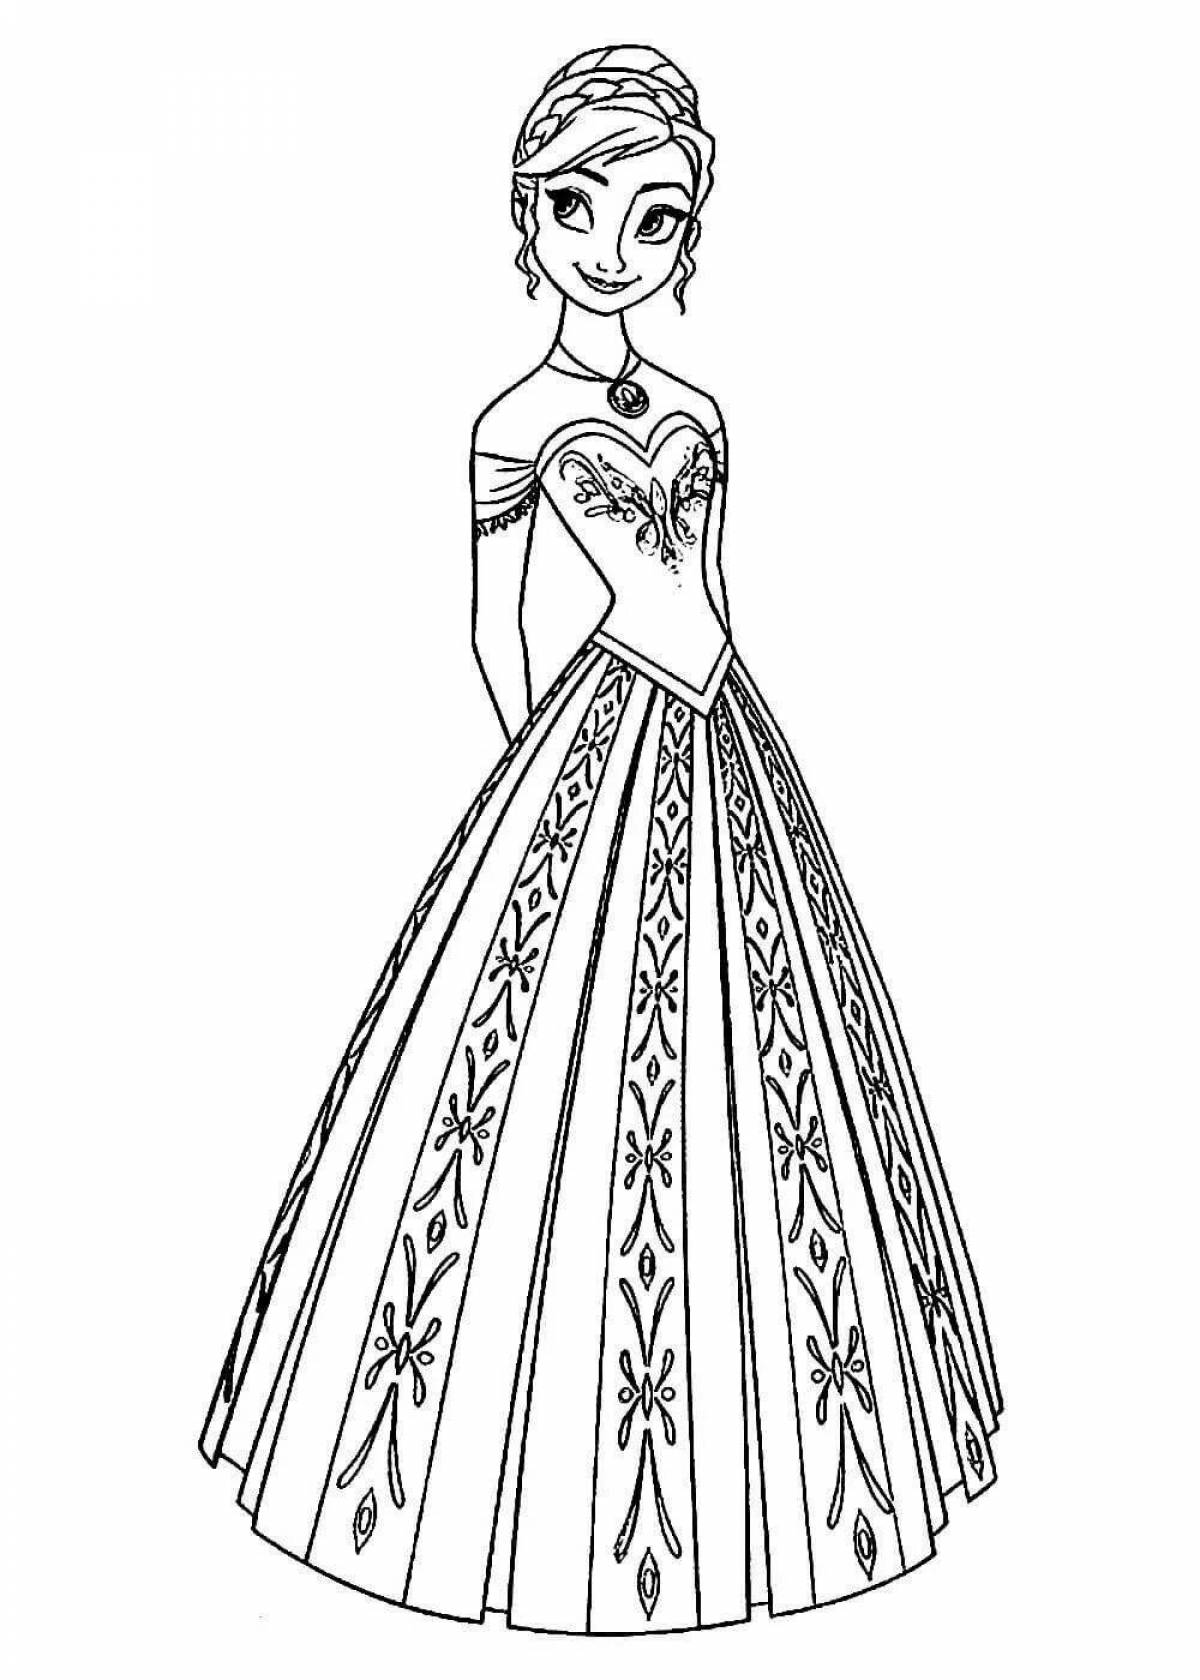 Coloring page charming anna princess